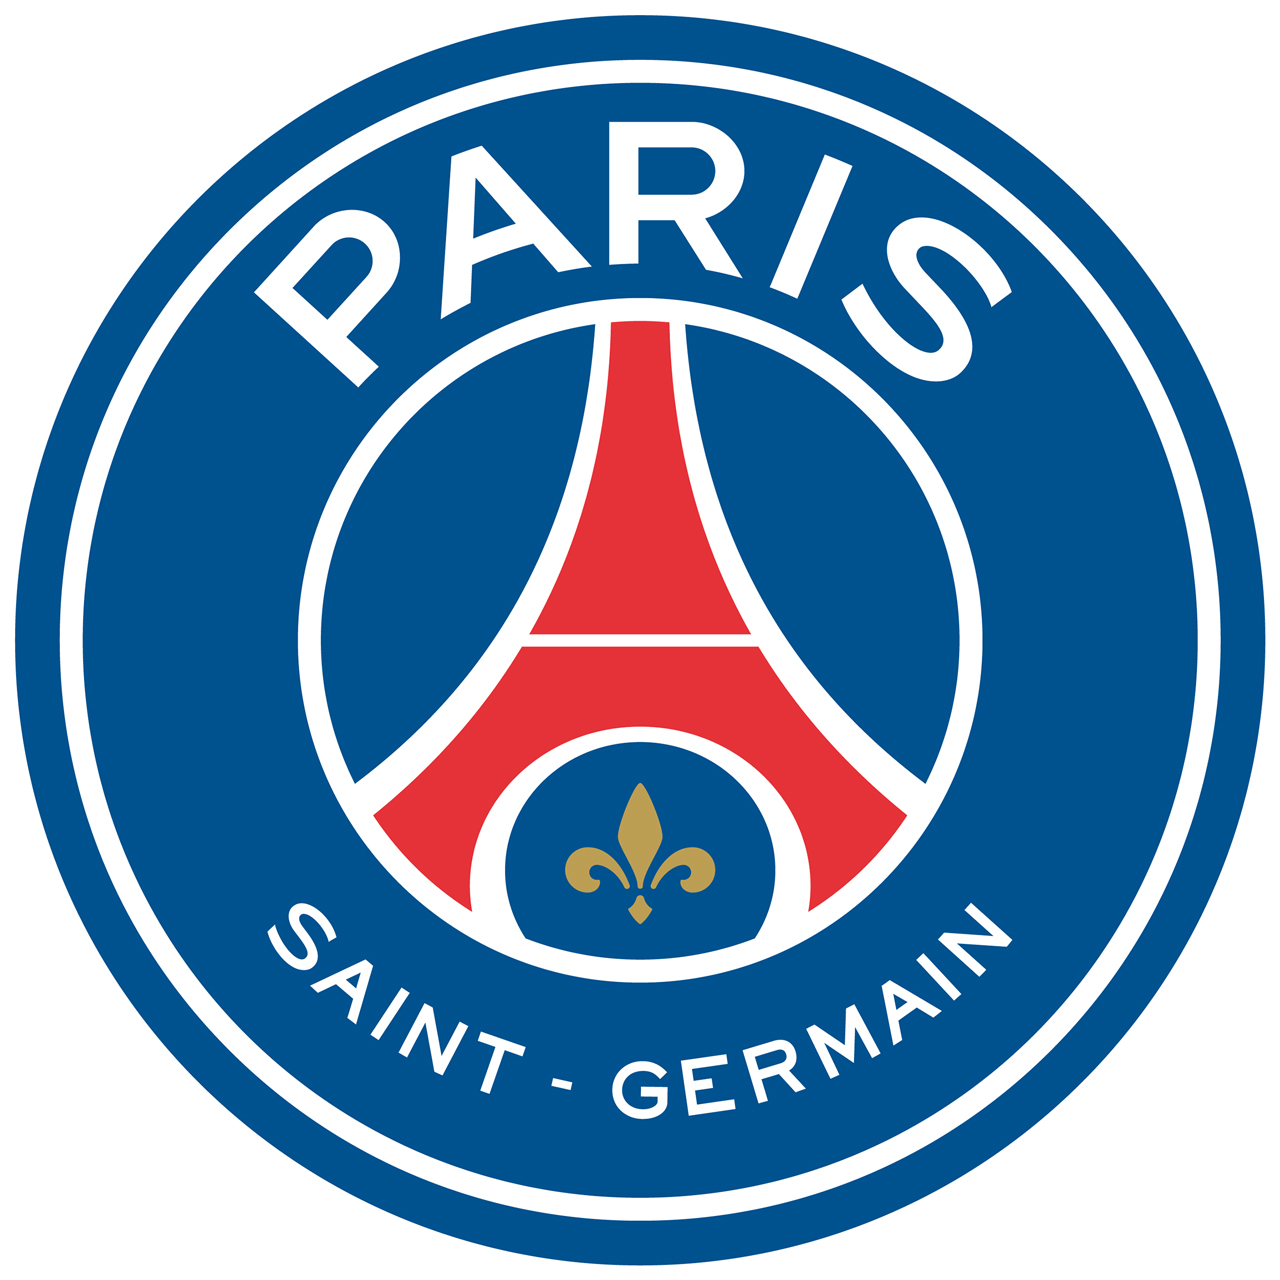 Paris Saint Germain FC